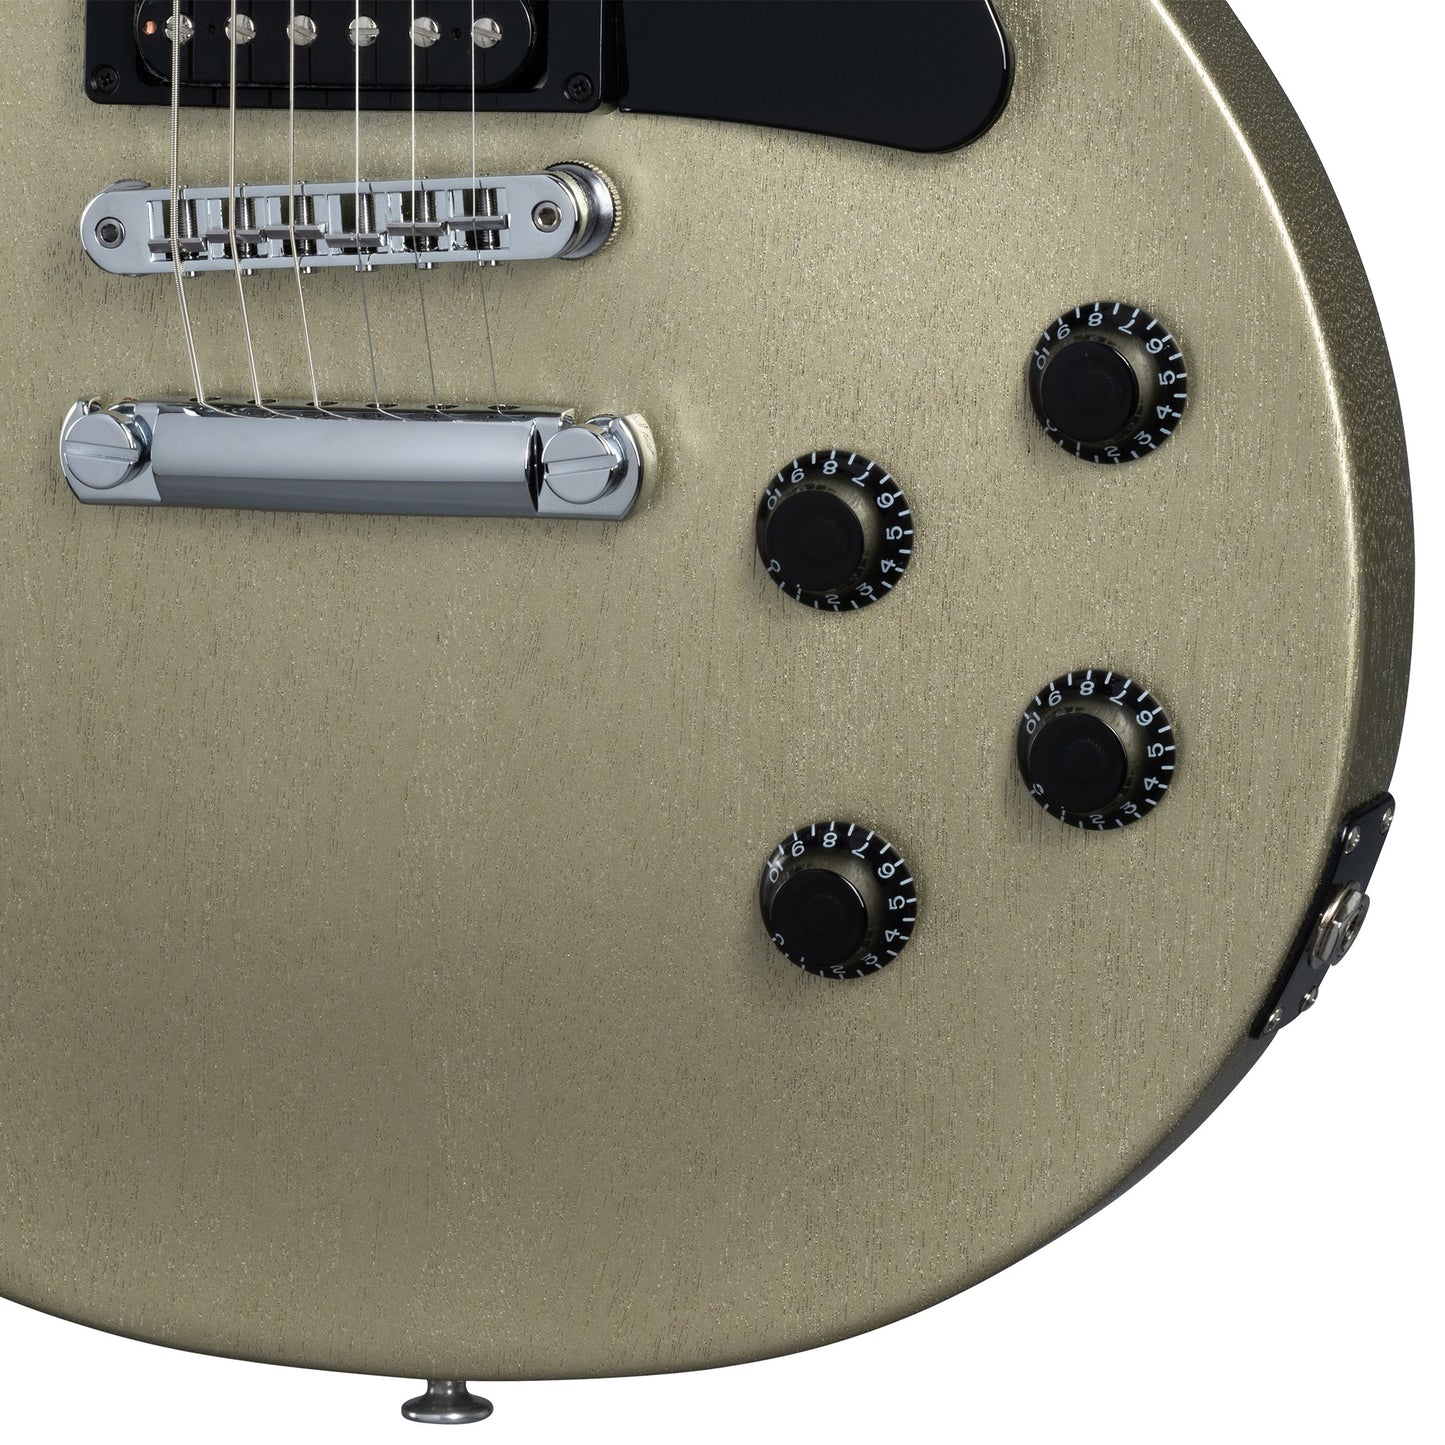 Gibson Les Paul Modern Lite Electric Guitar - Gold Mist Satin